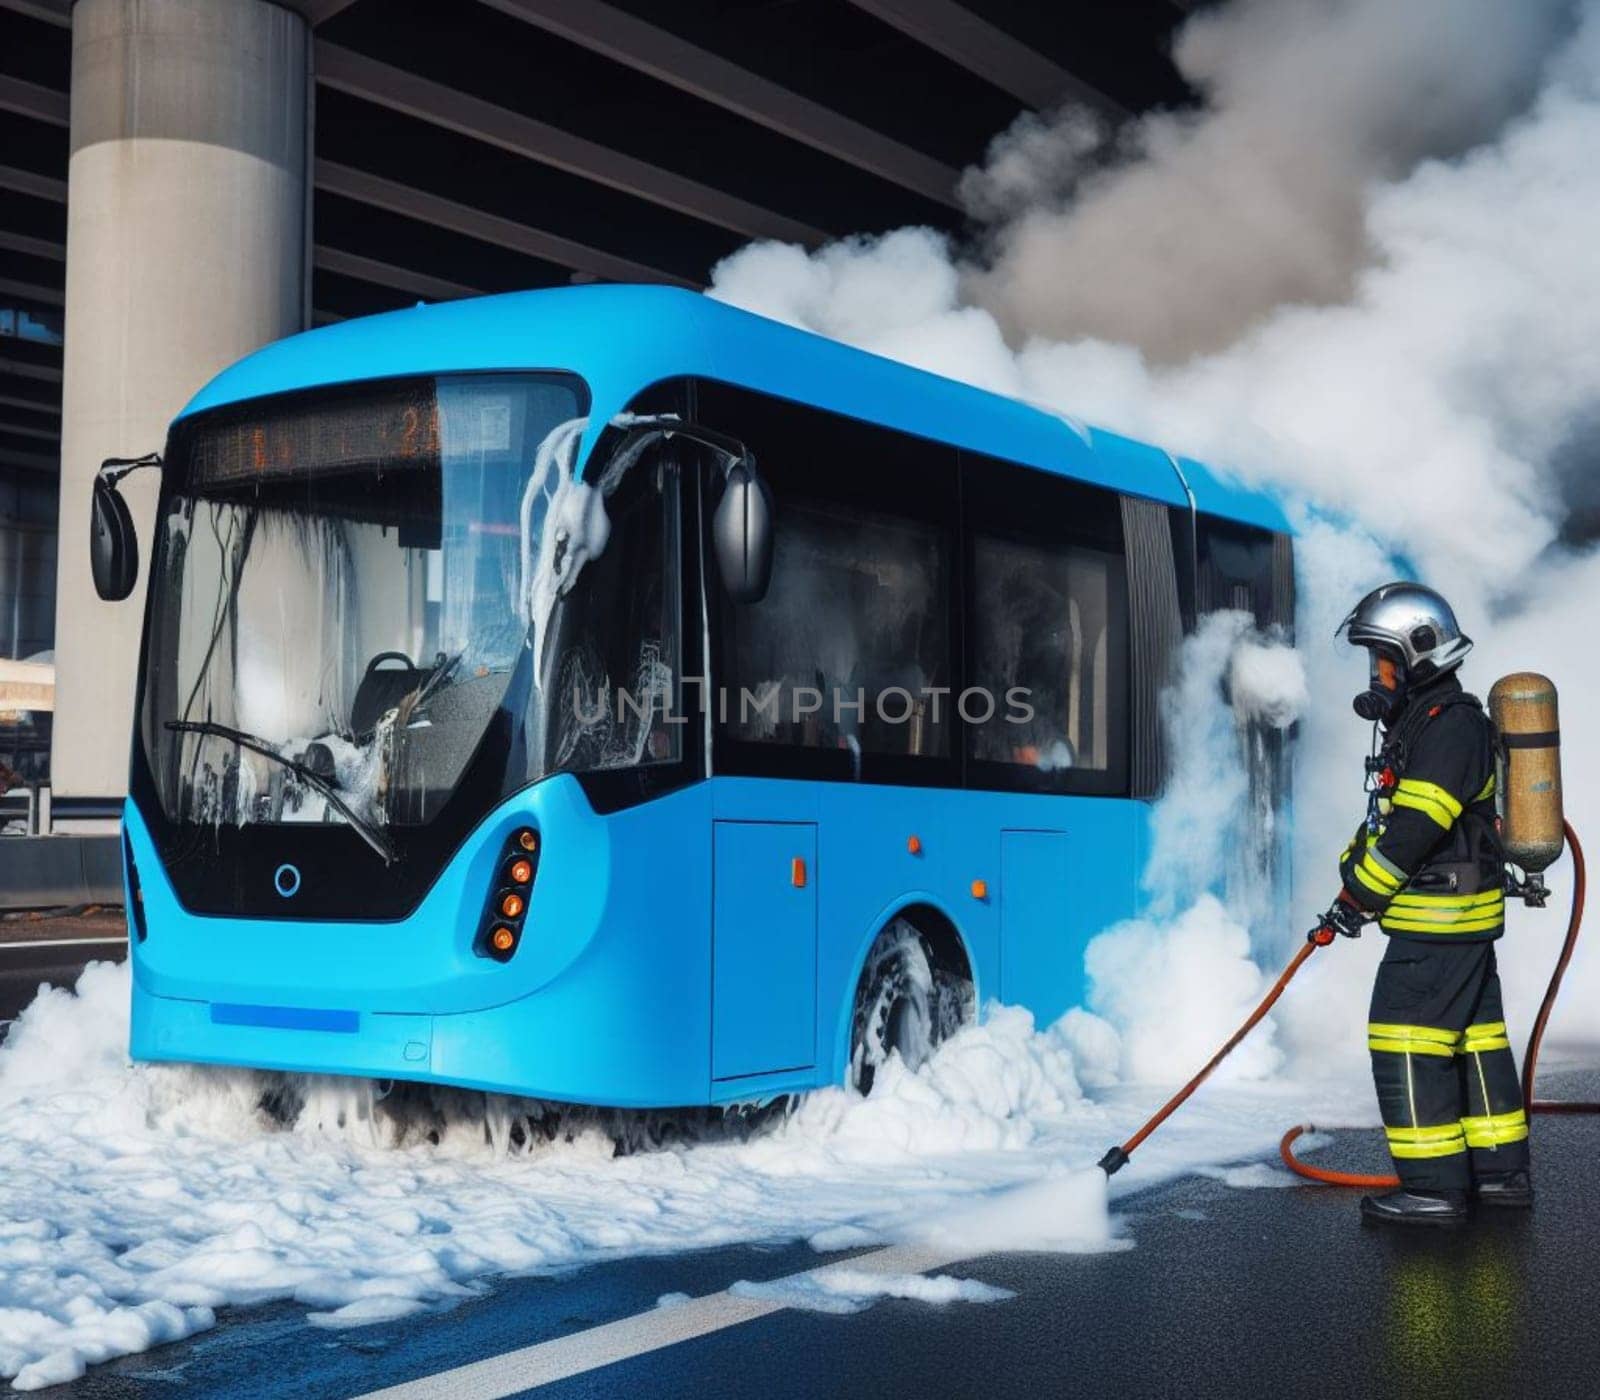 electric hybrid city bus burn bottom chasis, firefighter apply foam to extinguish flames big smoke by verbano